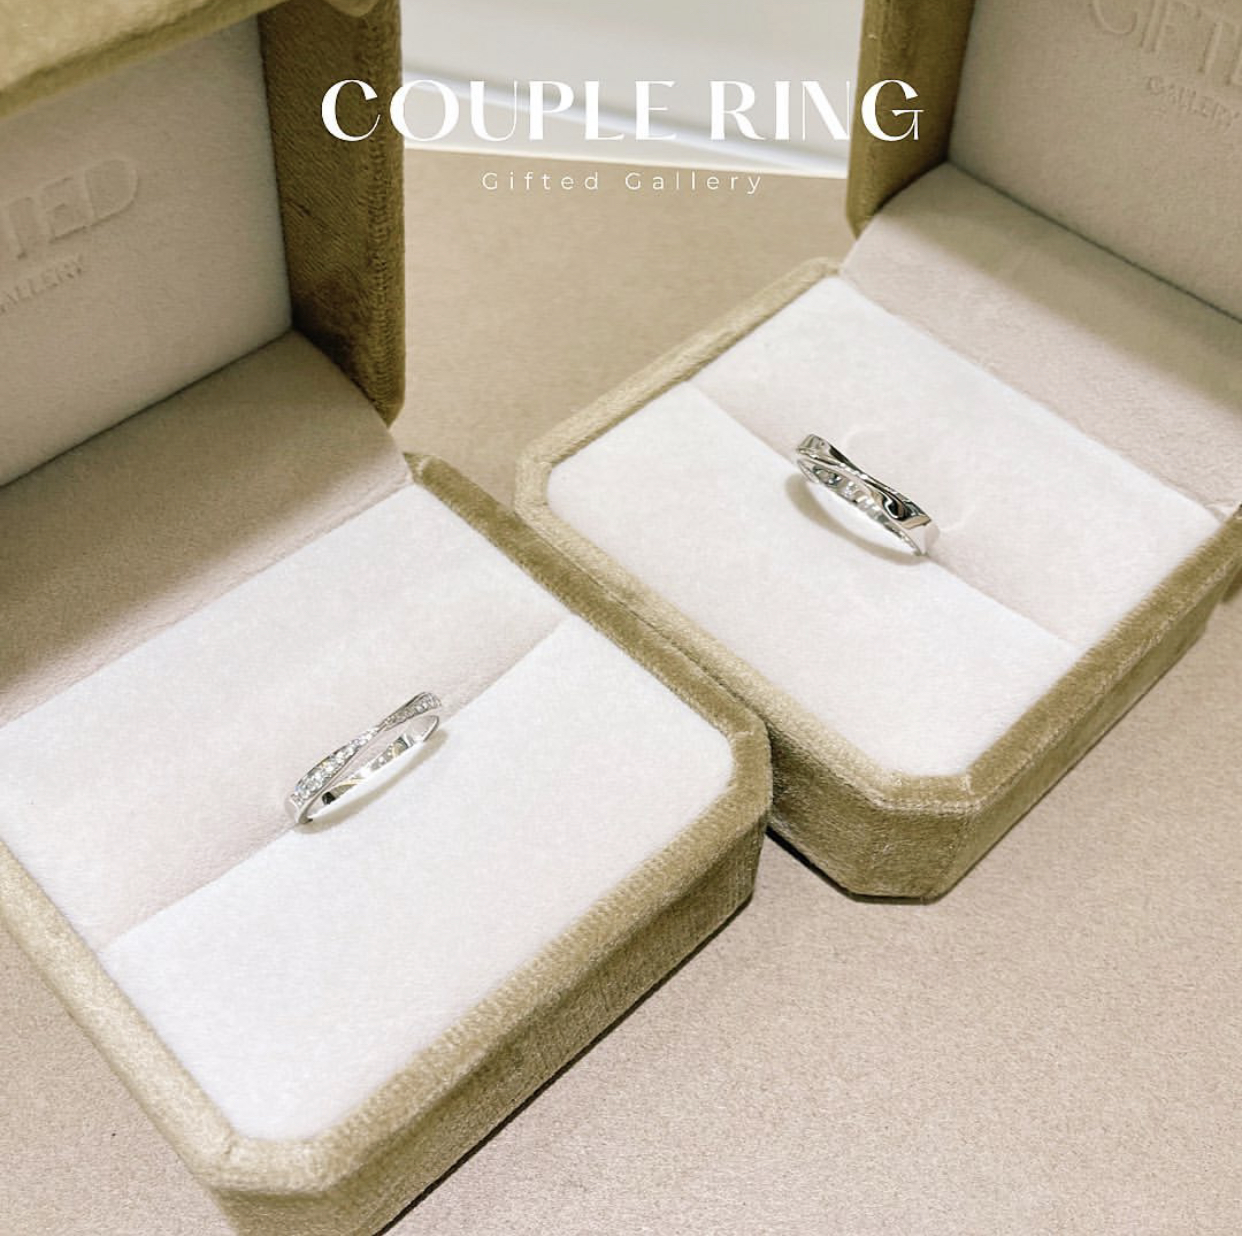 FIANCÉE-Cuddle Couple Ring